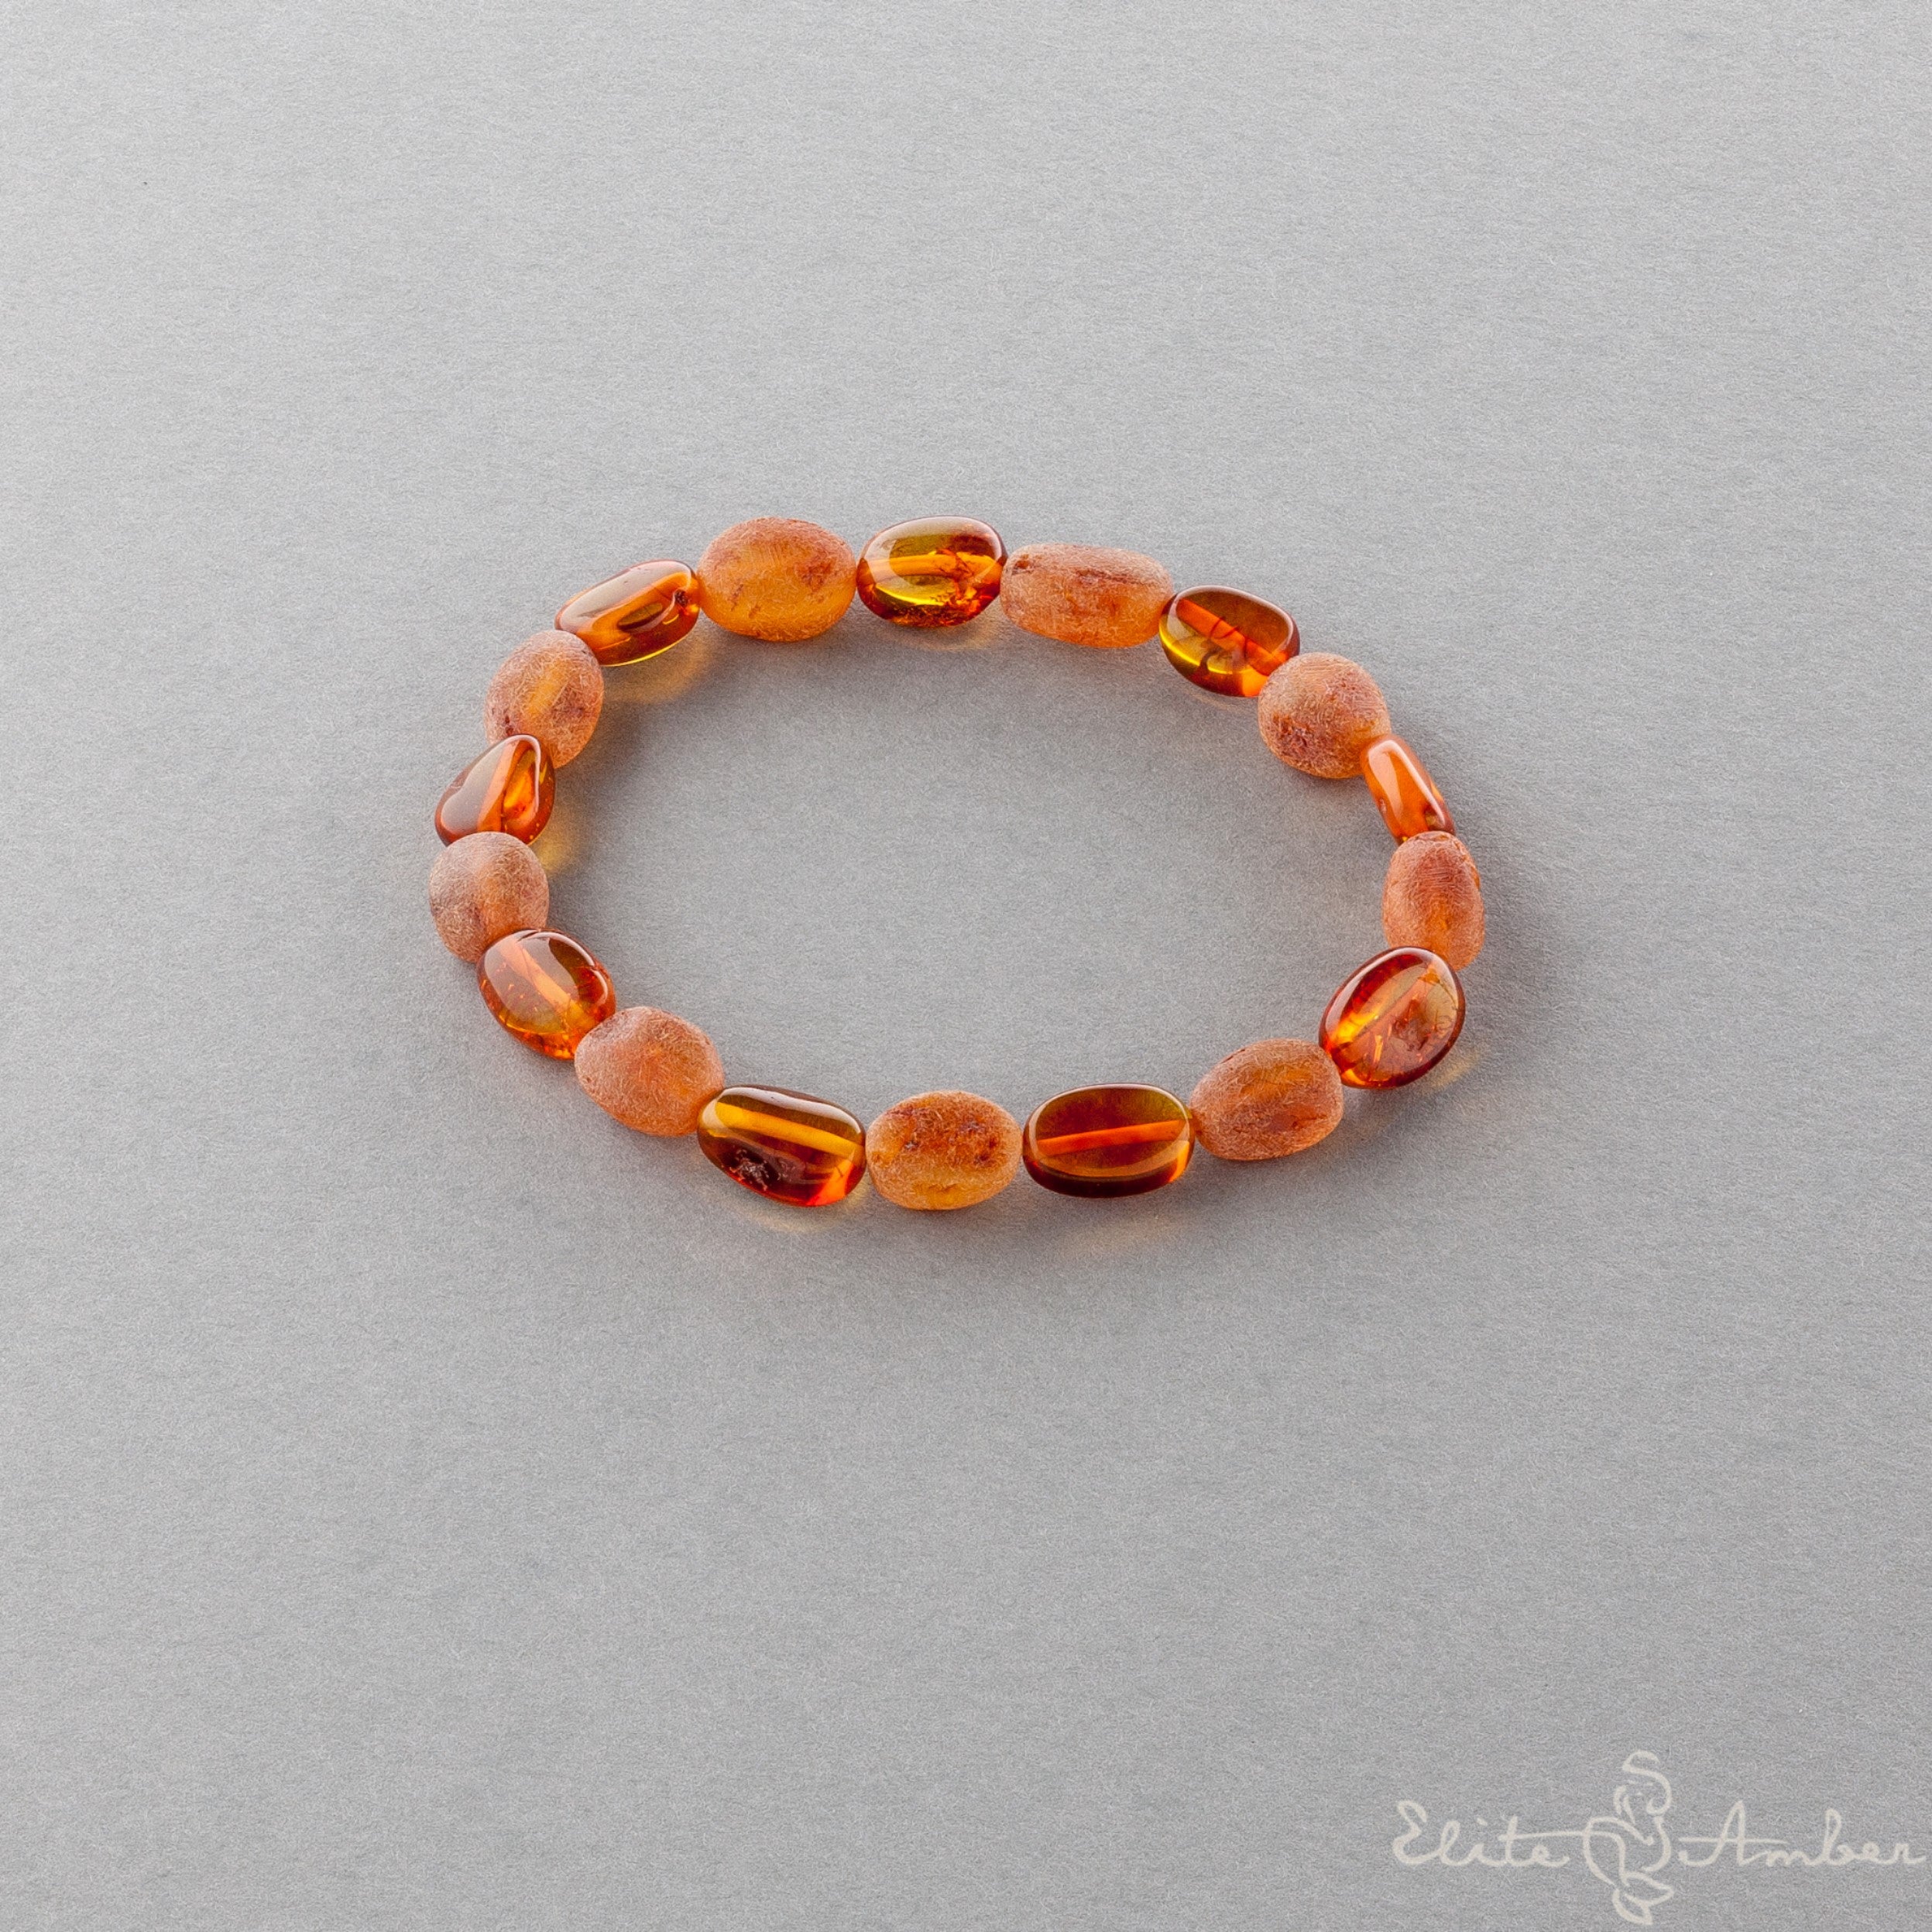 Amber bracelet "Polished and raw amber pebbles"